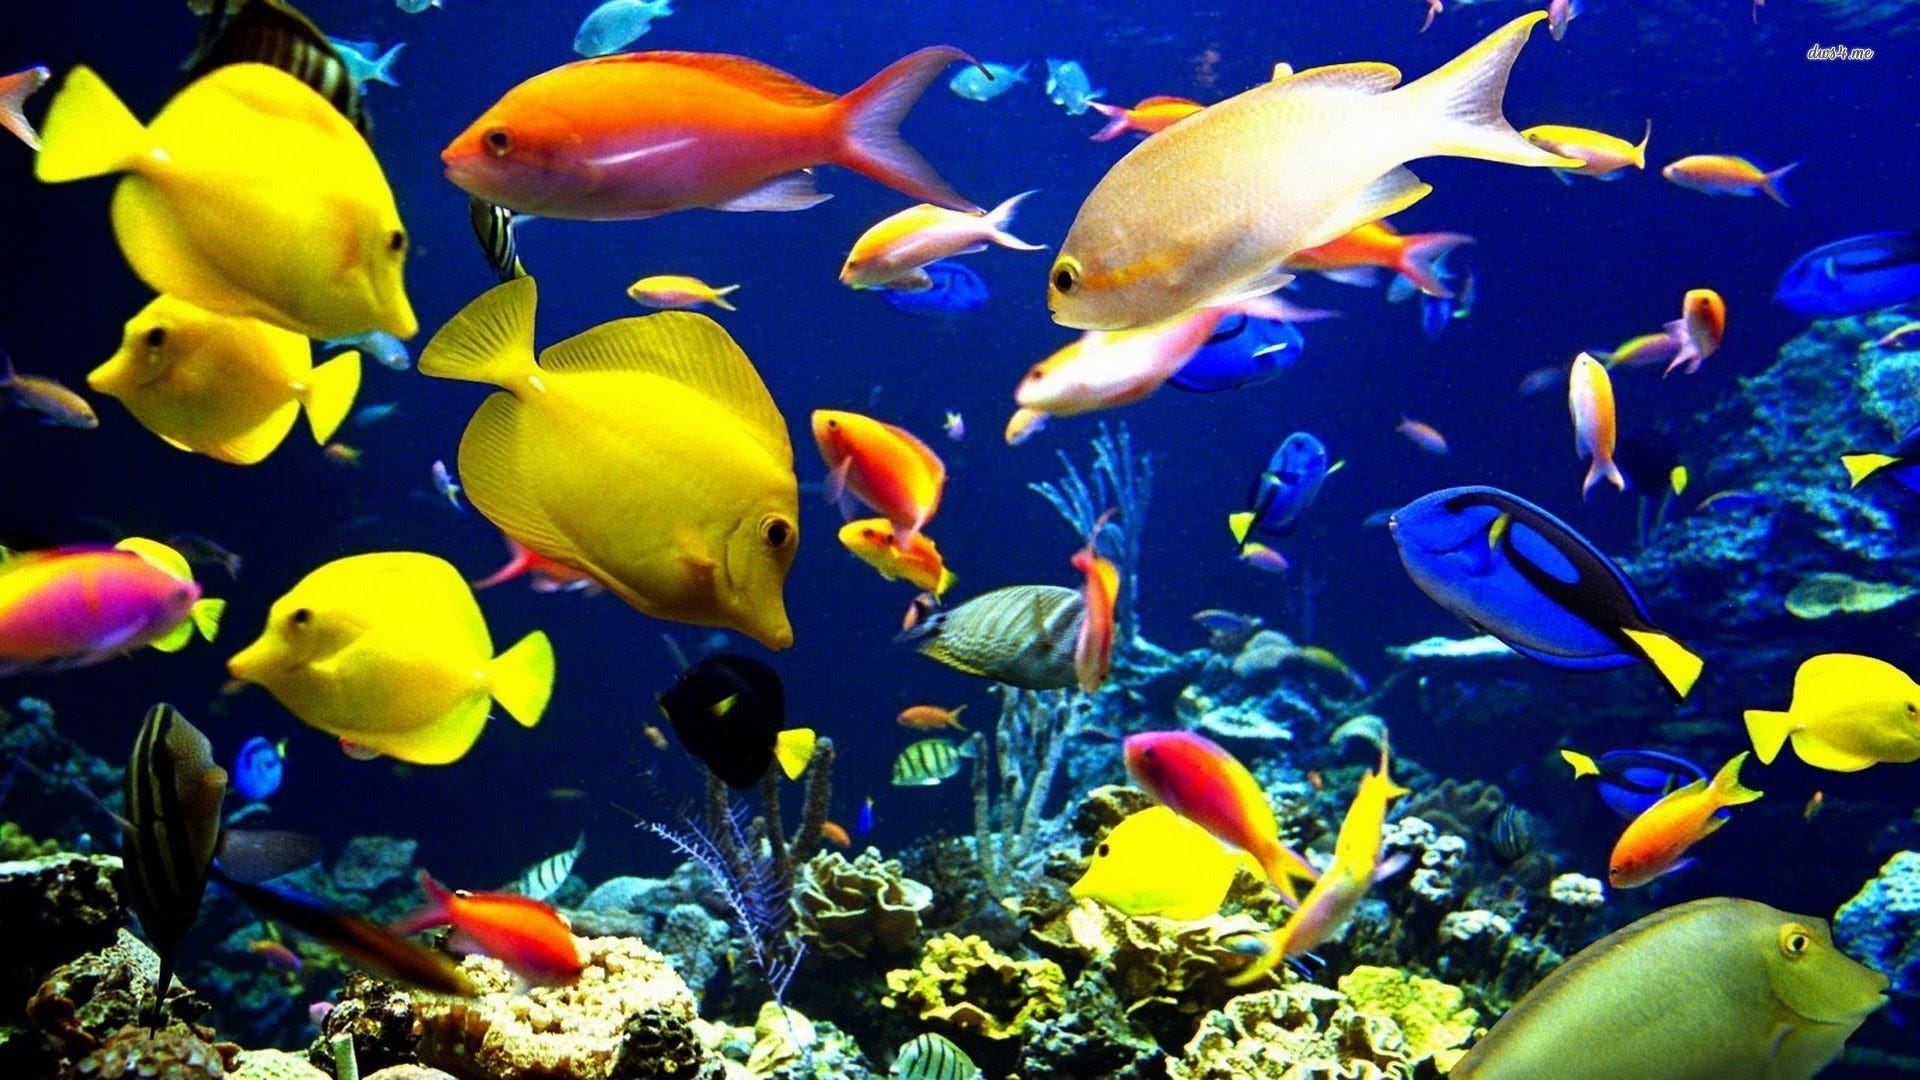 Multi-color fish swimming in blue water